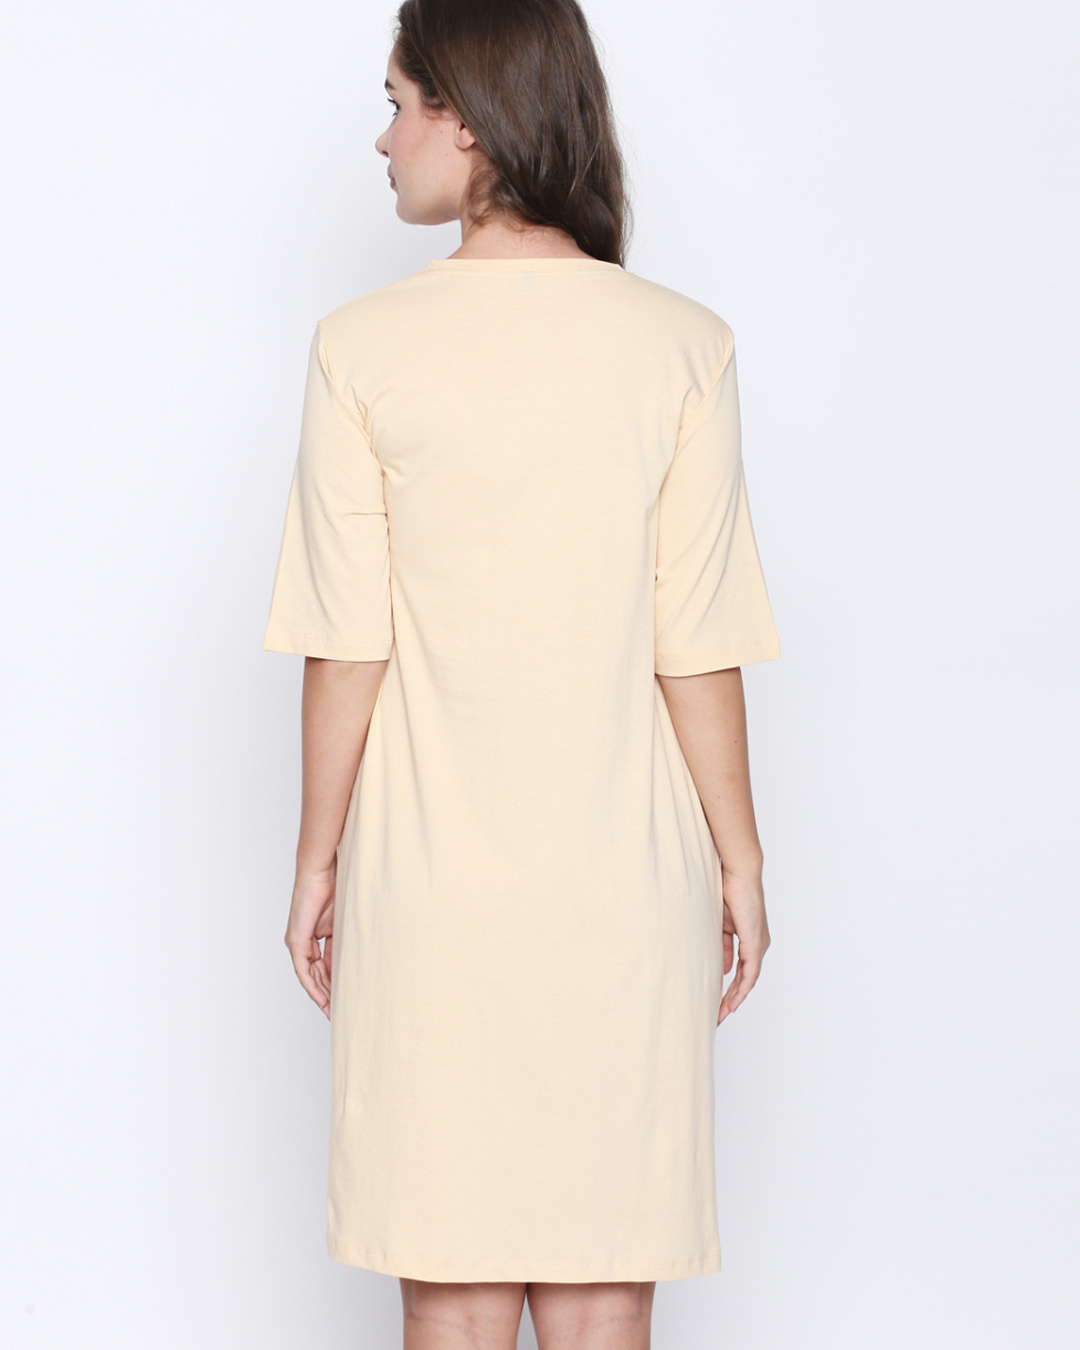 Shop Beige Cotton Animal Print Half Sleeve Dress For Women-Back